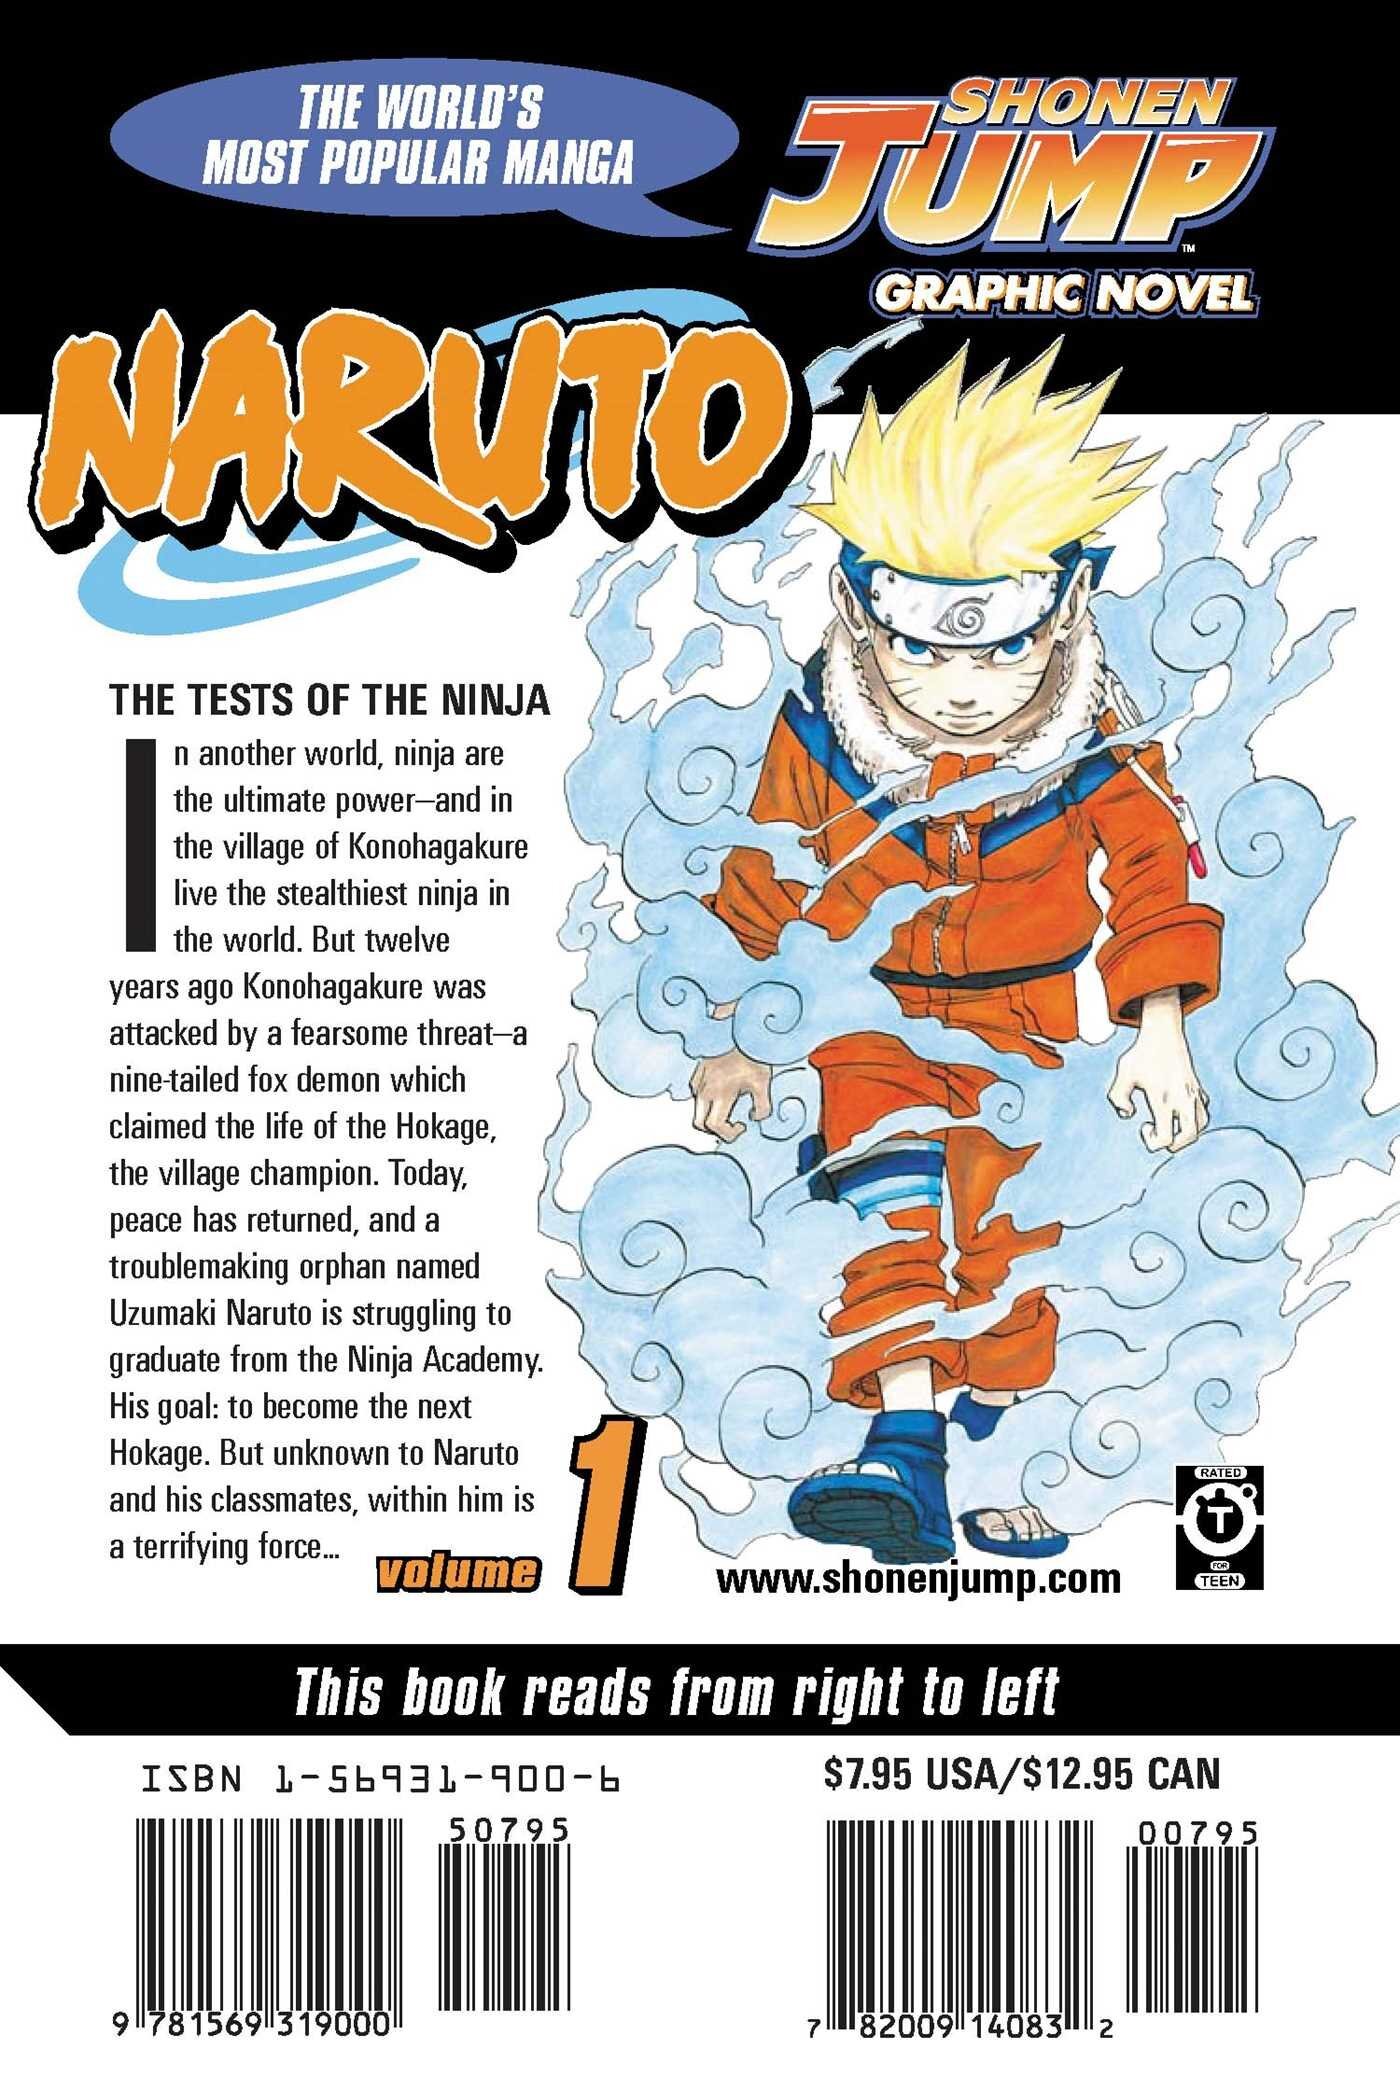 Couvertures, images et illustrations de Naruto, Tome 1 : Naruto Uzumaki !!  de Masashi Kishimoto